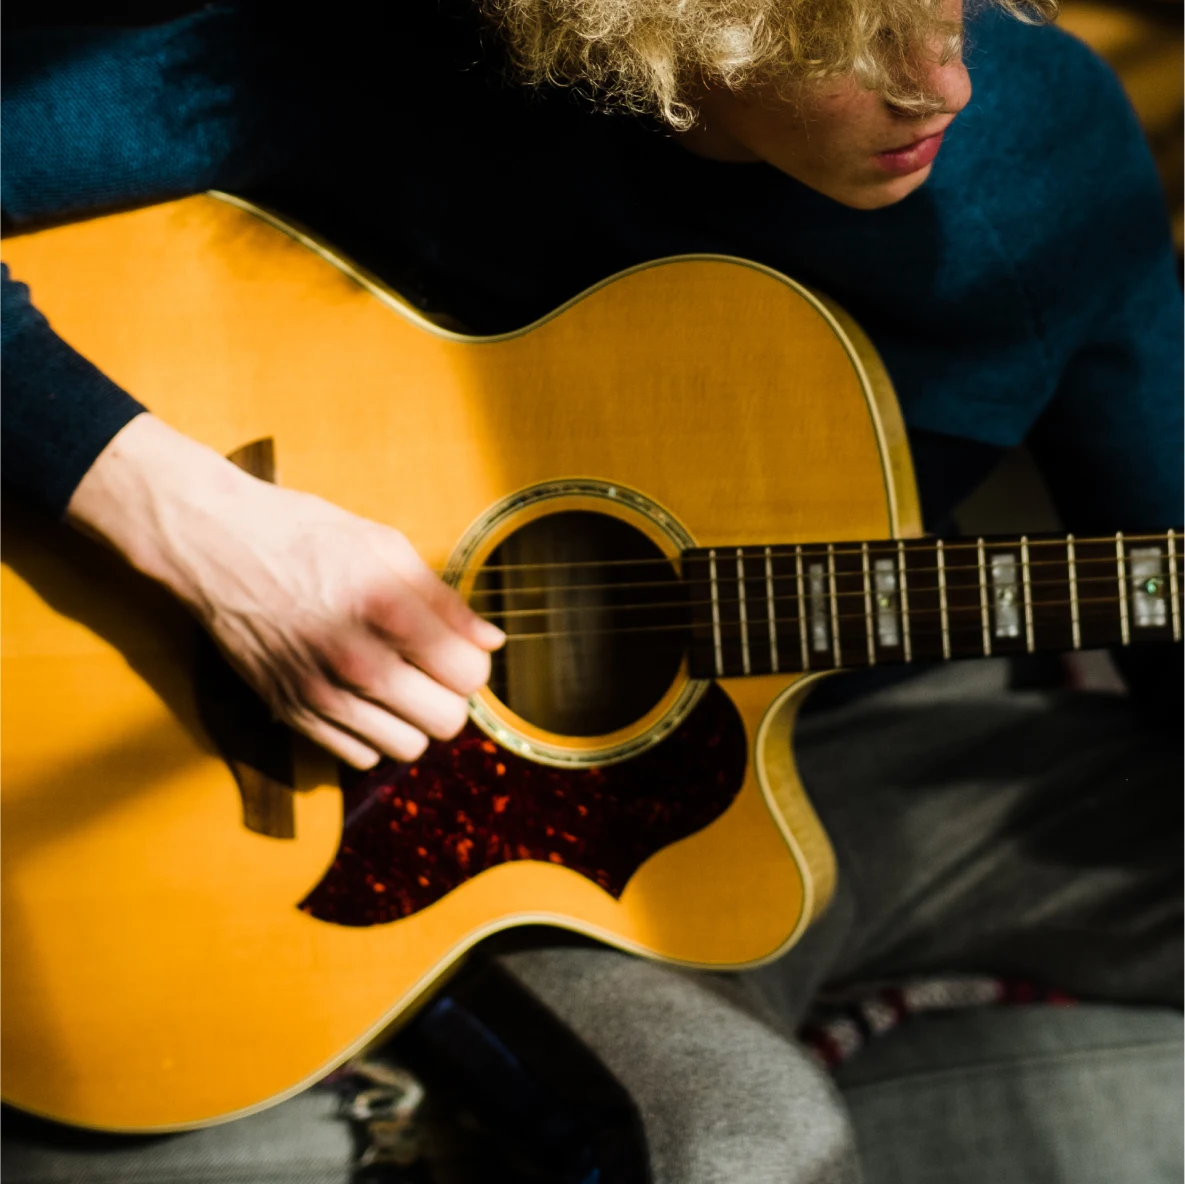 Man with blonde hair playing guitar